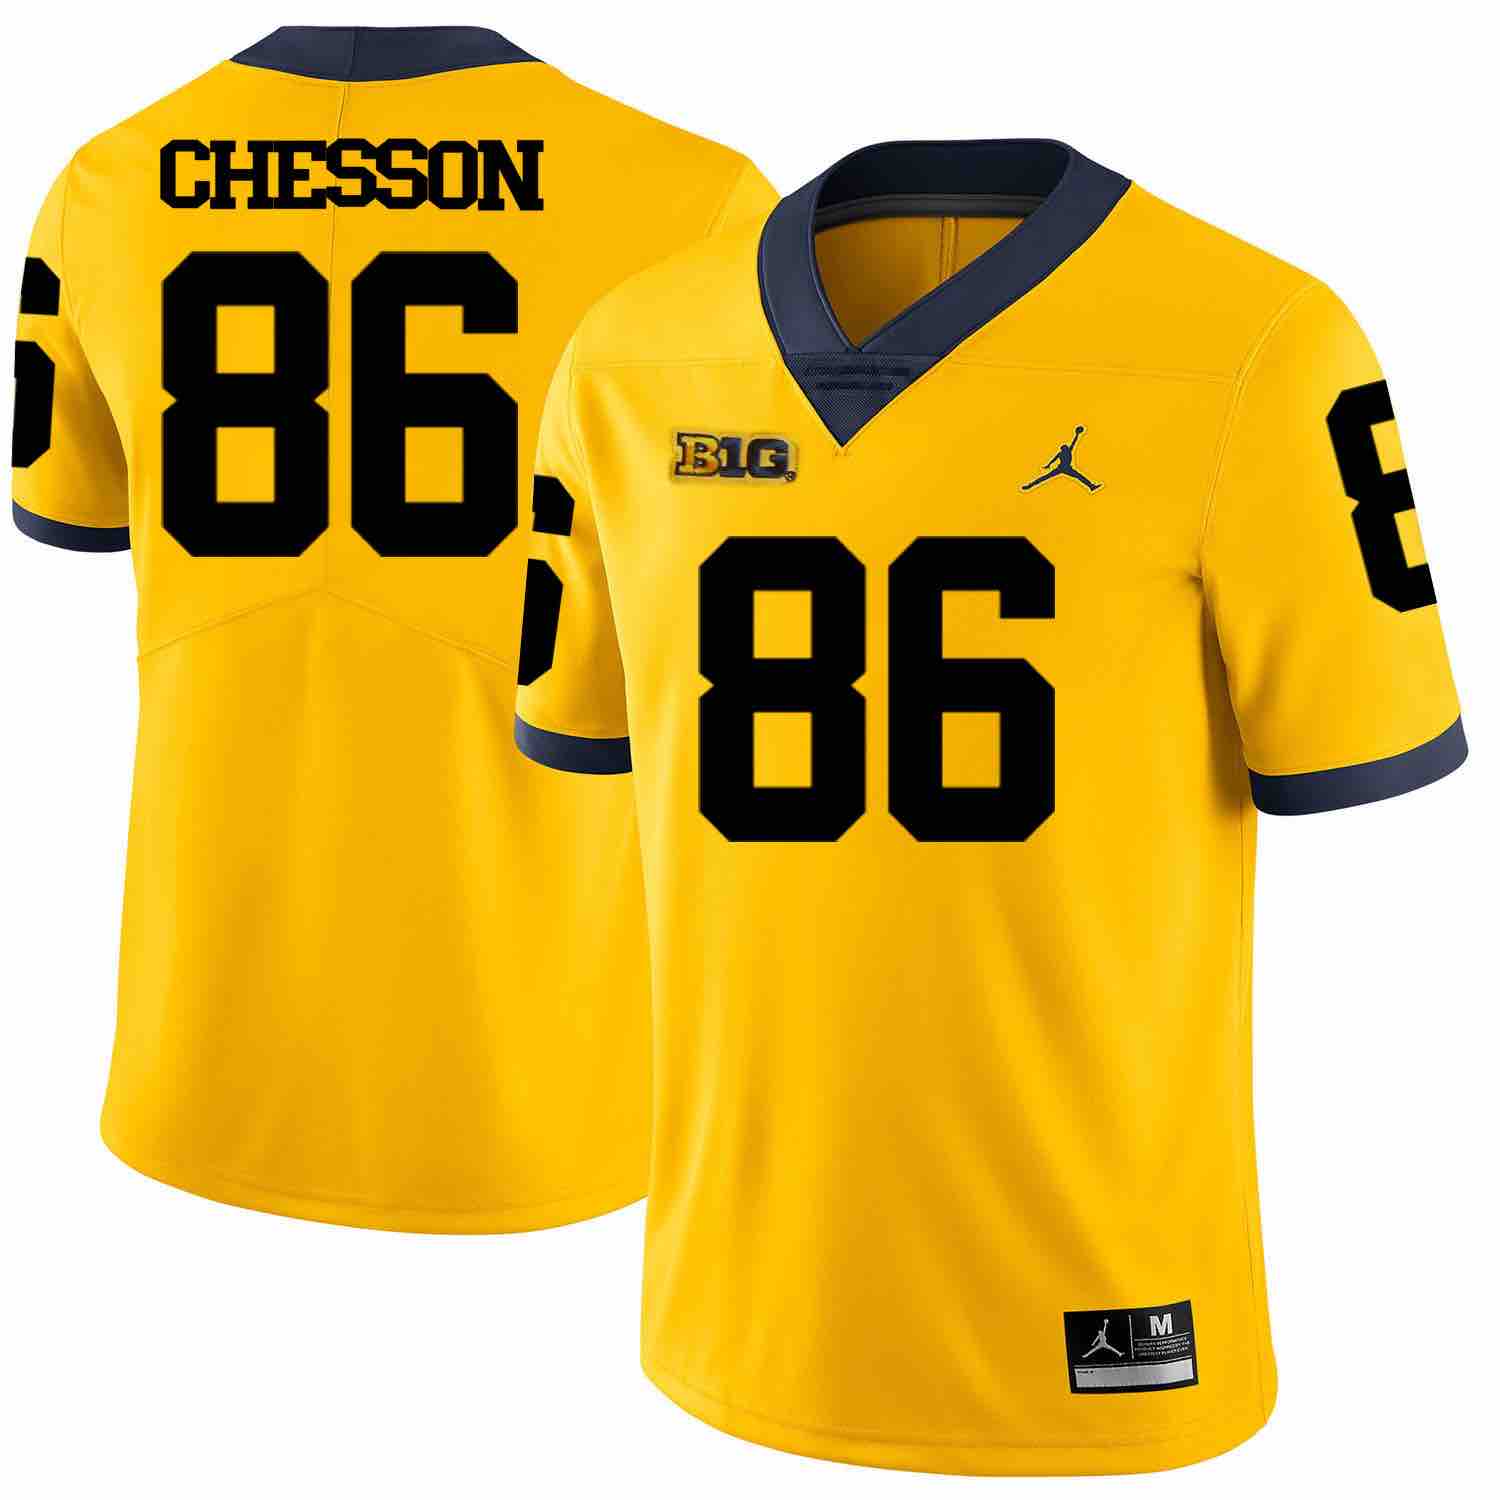 NCAA Michigan Wolverines #86 Chesson Yellow Football Jersey